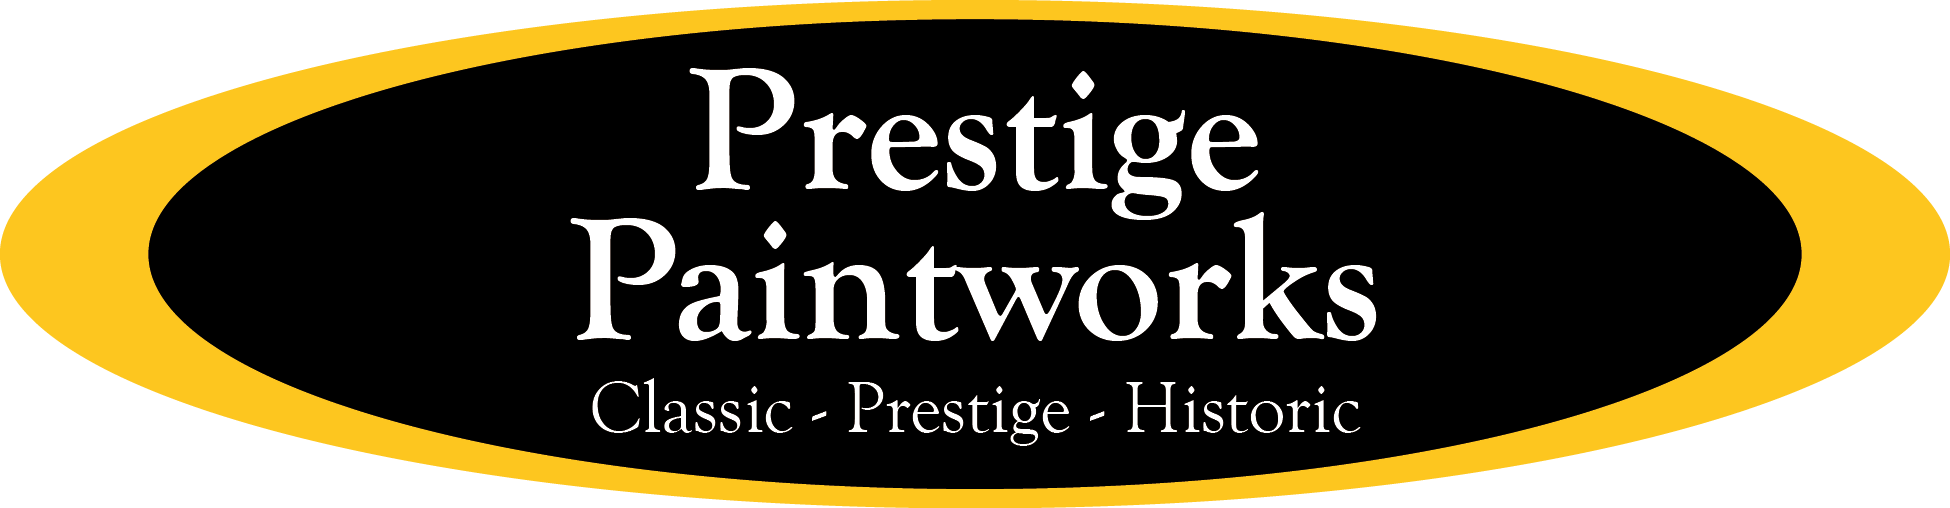 prestige paintworks logo for household names